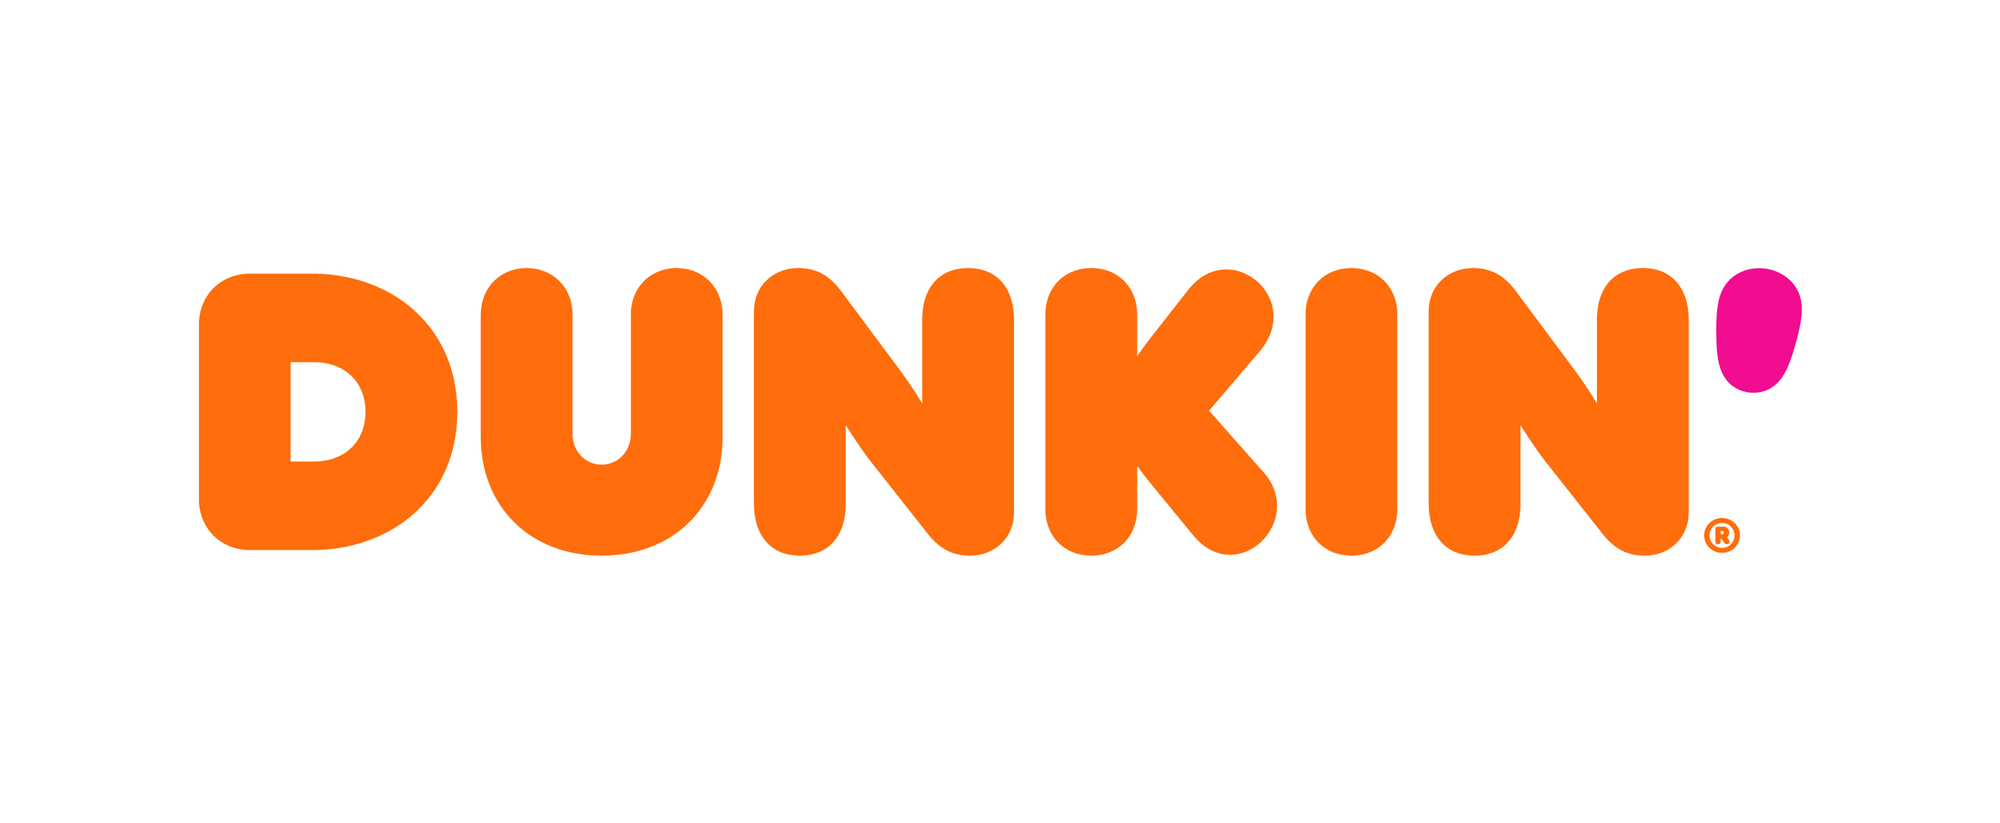 01-dunkin_logo.png